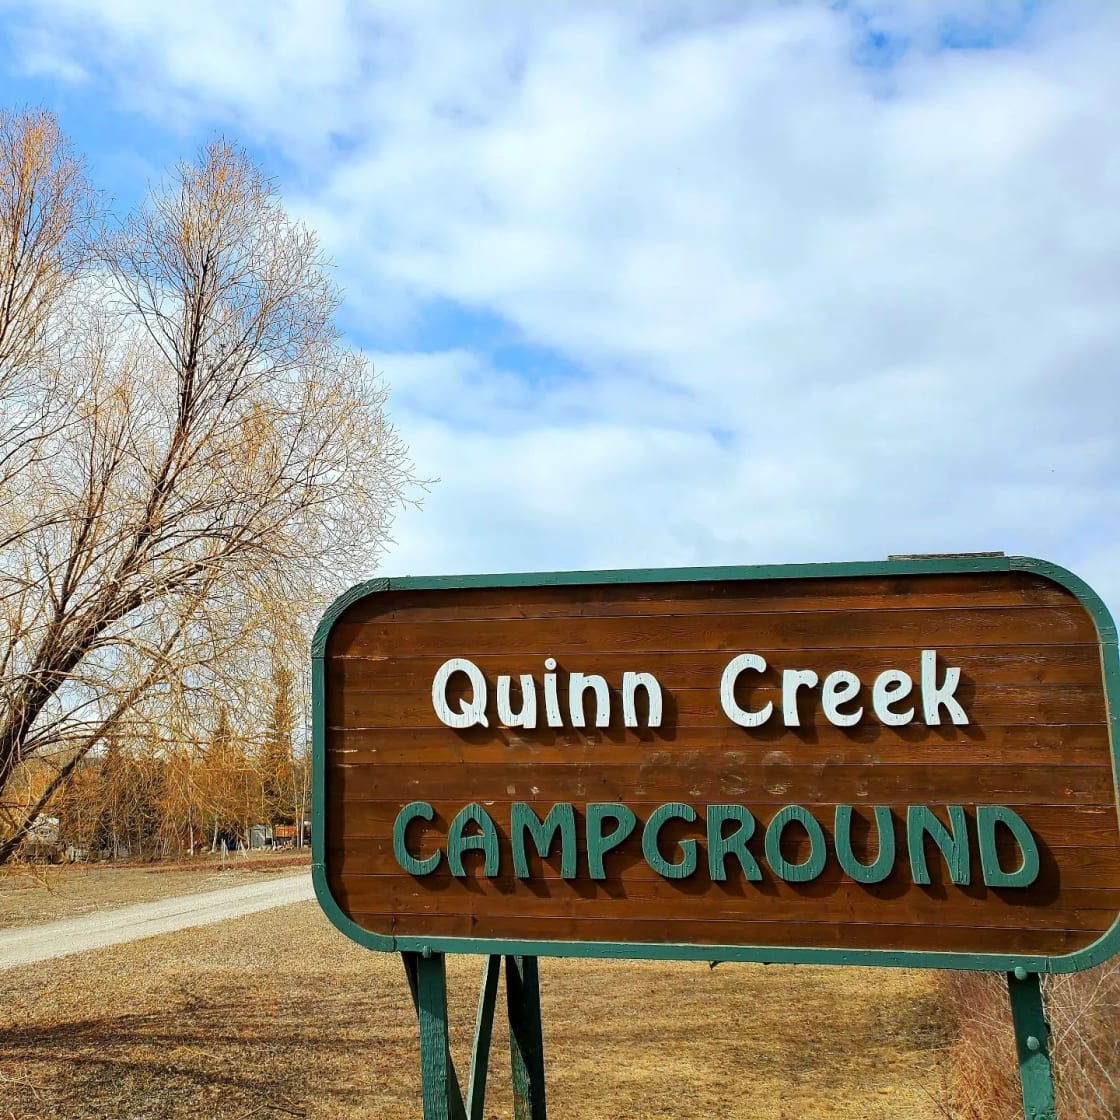 Quinn Creek Campground